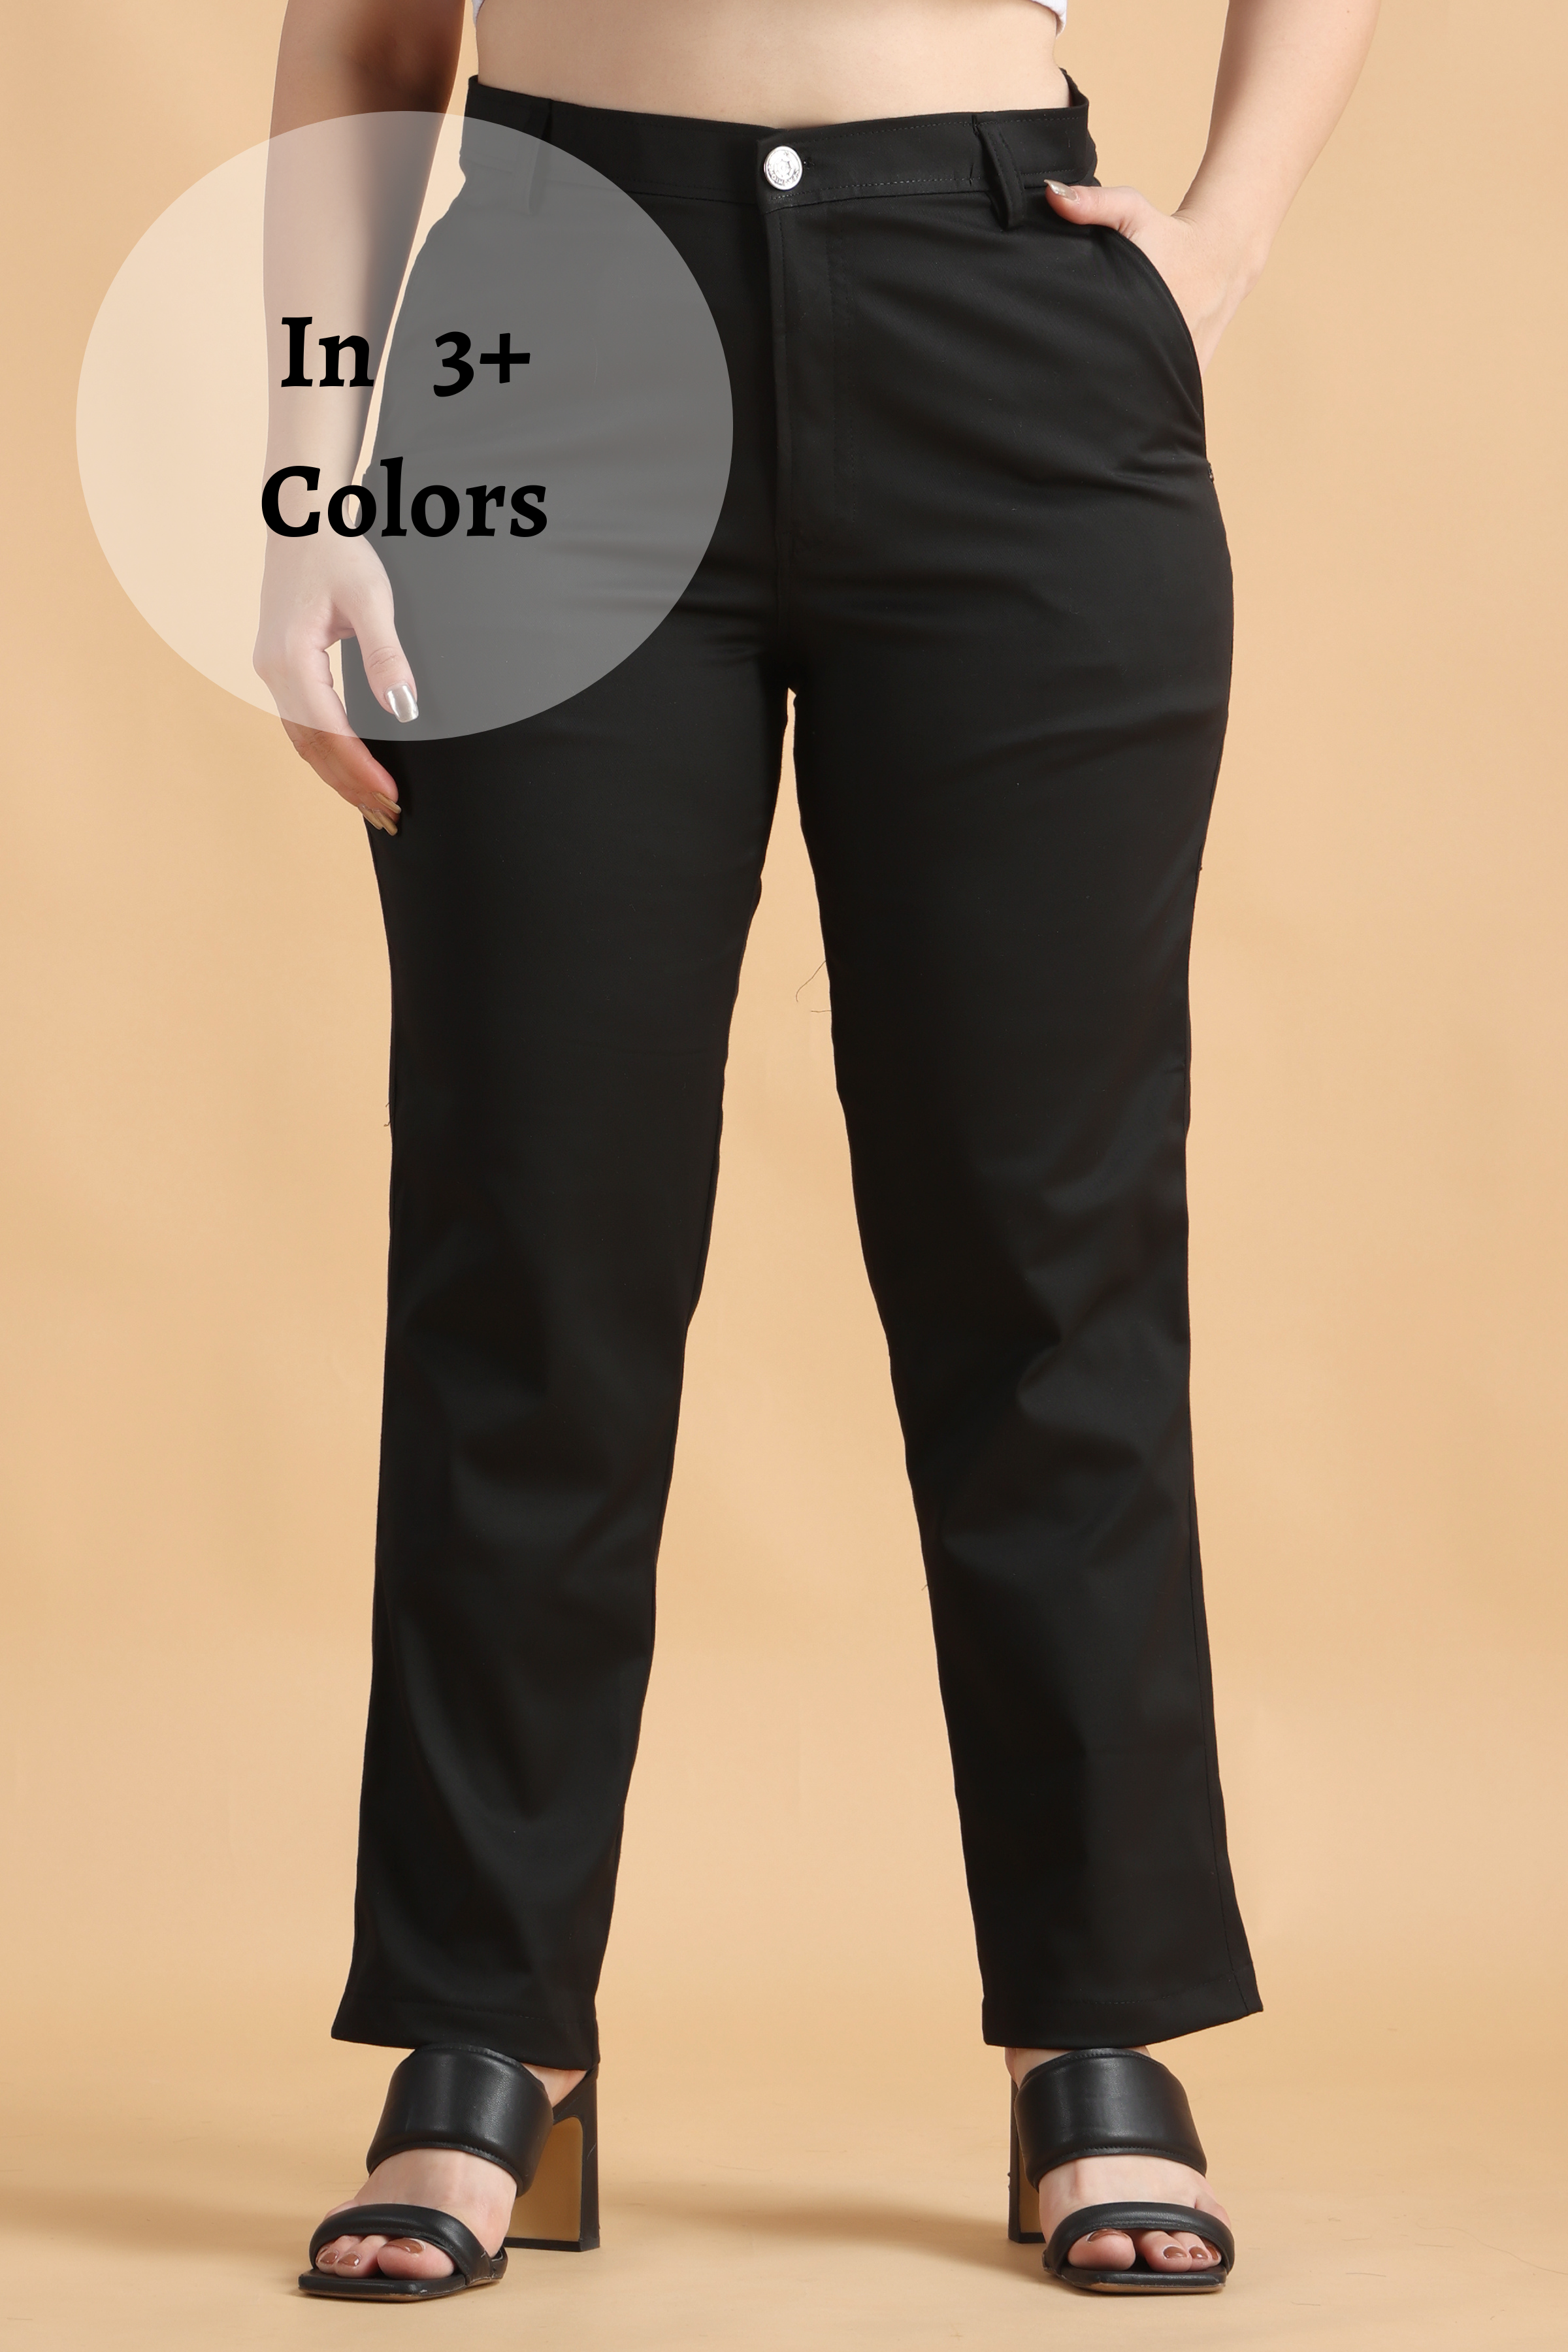 Ladies Straight Trousers Elasticated Waist Smart Pants Work Pull On RRP 30  BR151 | eBay